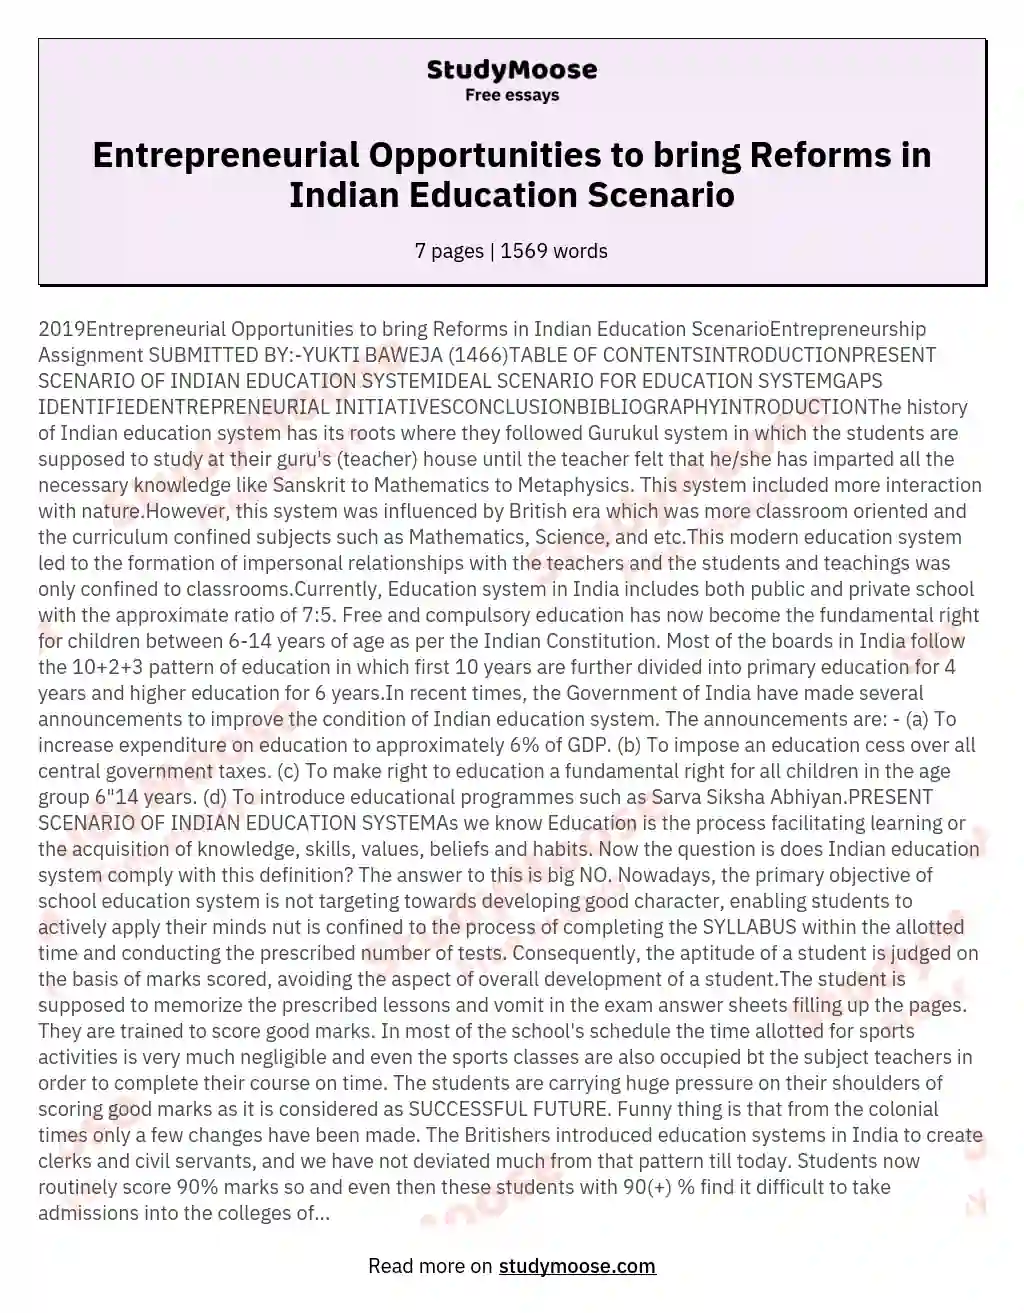 Entrepreneurial Opportunities to bring Reforms in Indian Education Scenario essay